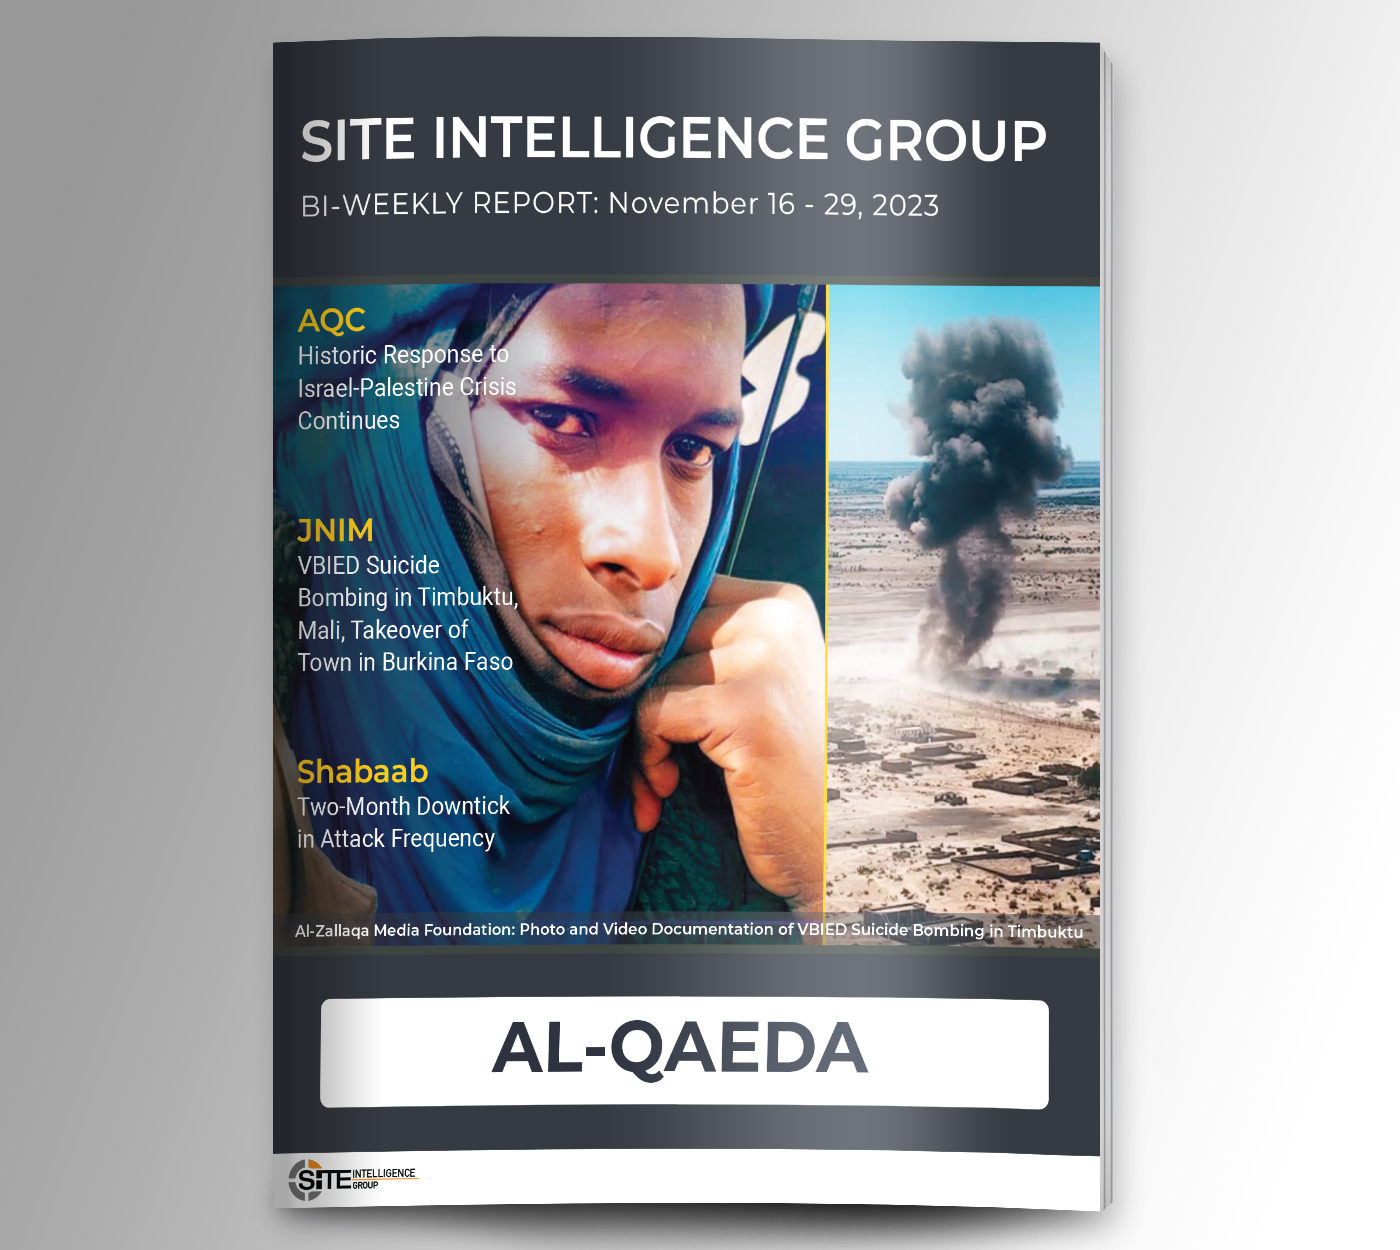 Bi-Weekly inSITE on al-Qaeda for November 16-29, 2023